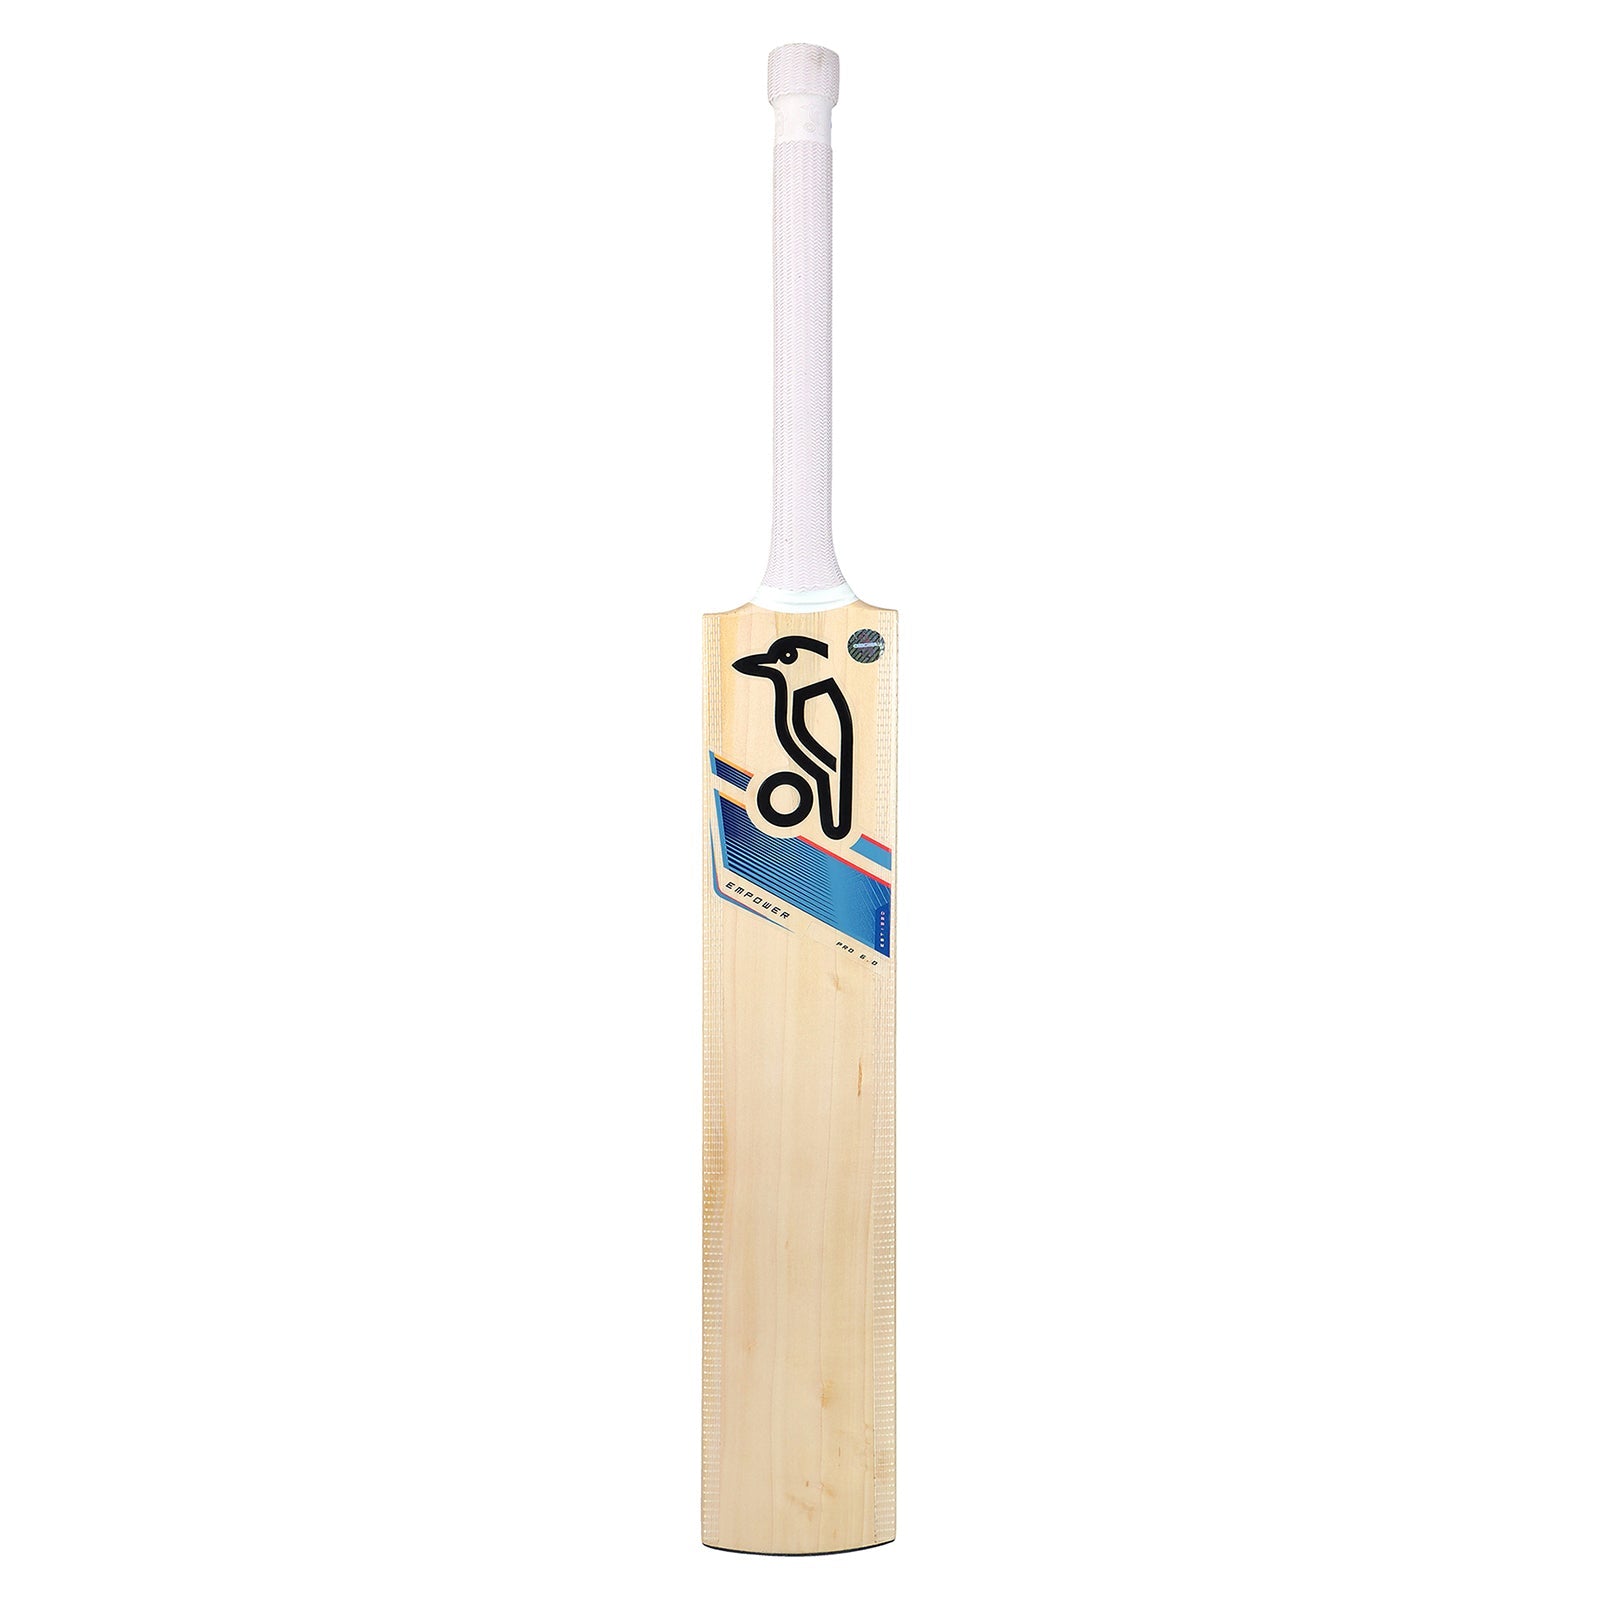 Kookaburra Empower Pro 6.0 Cricket Bat - Senior Long Blade